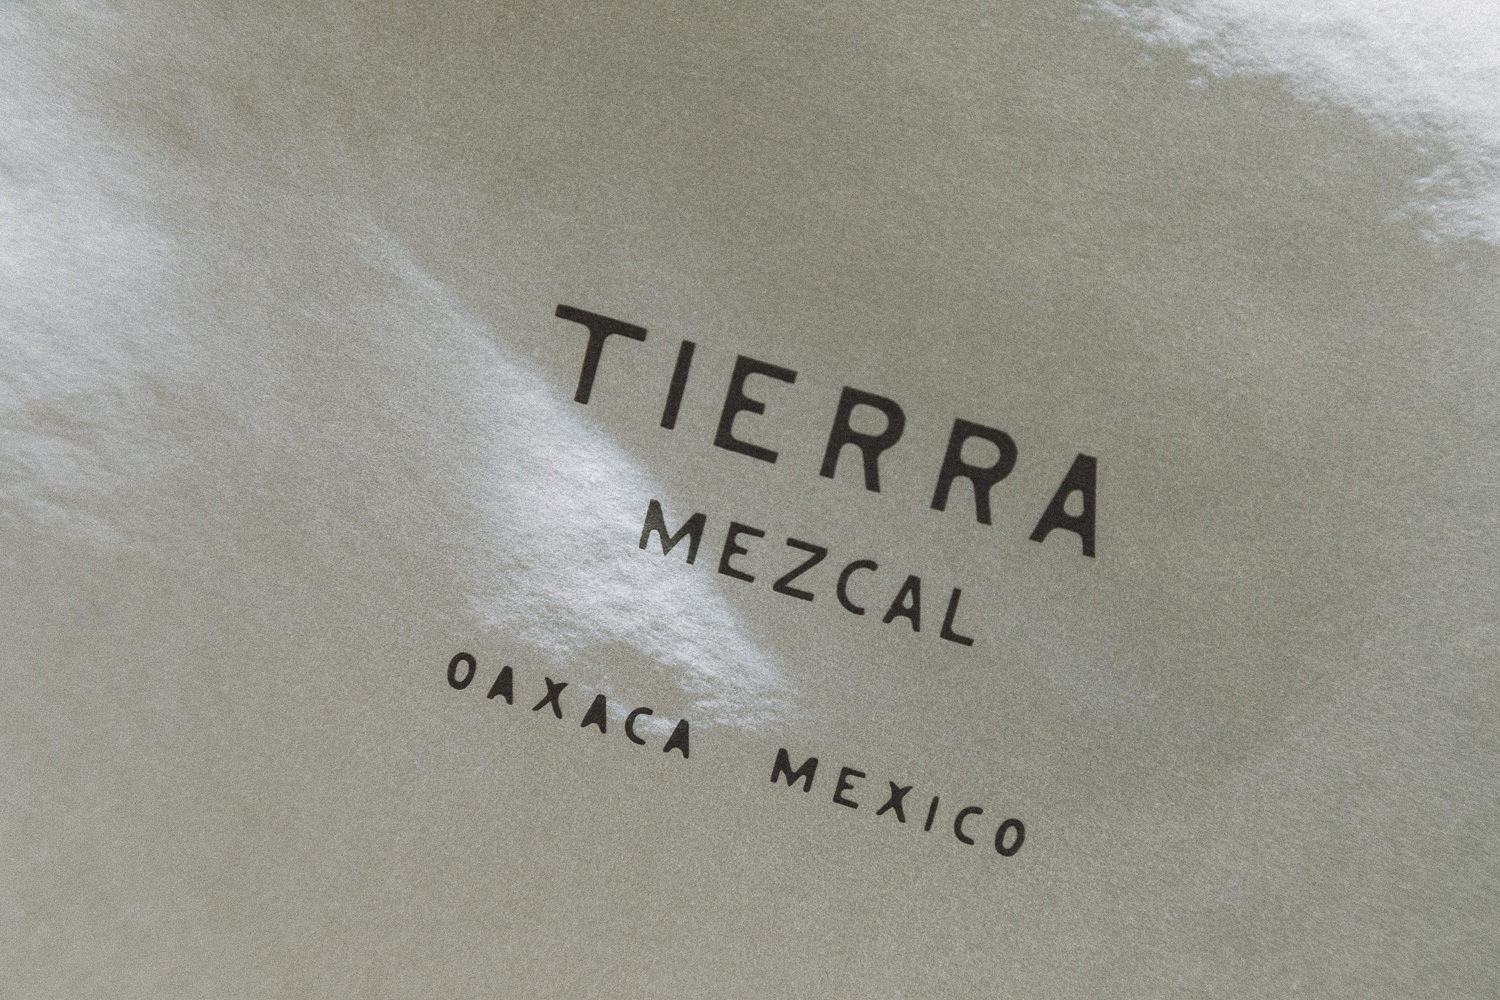 Tierra Mezvcal (10)